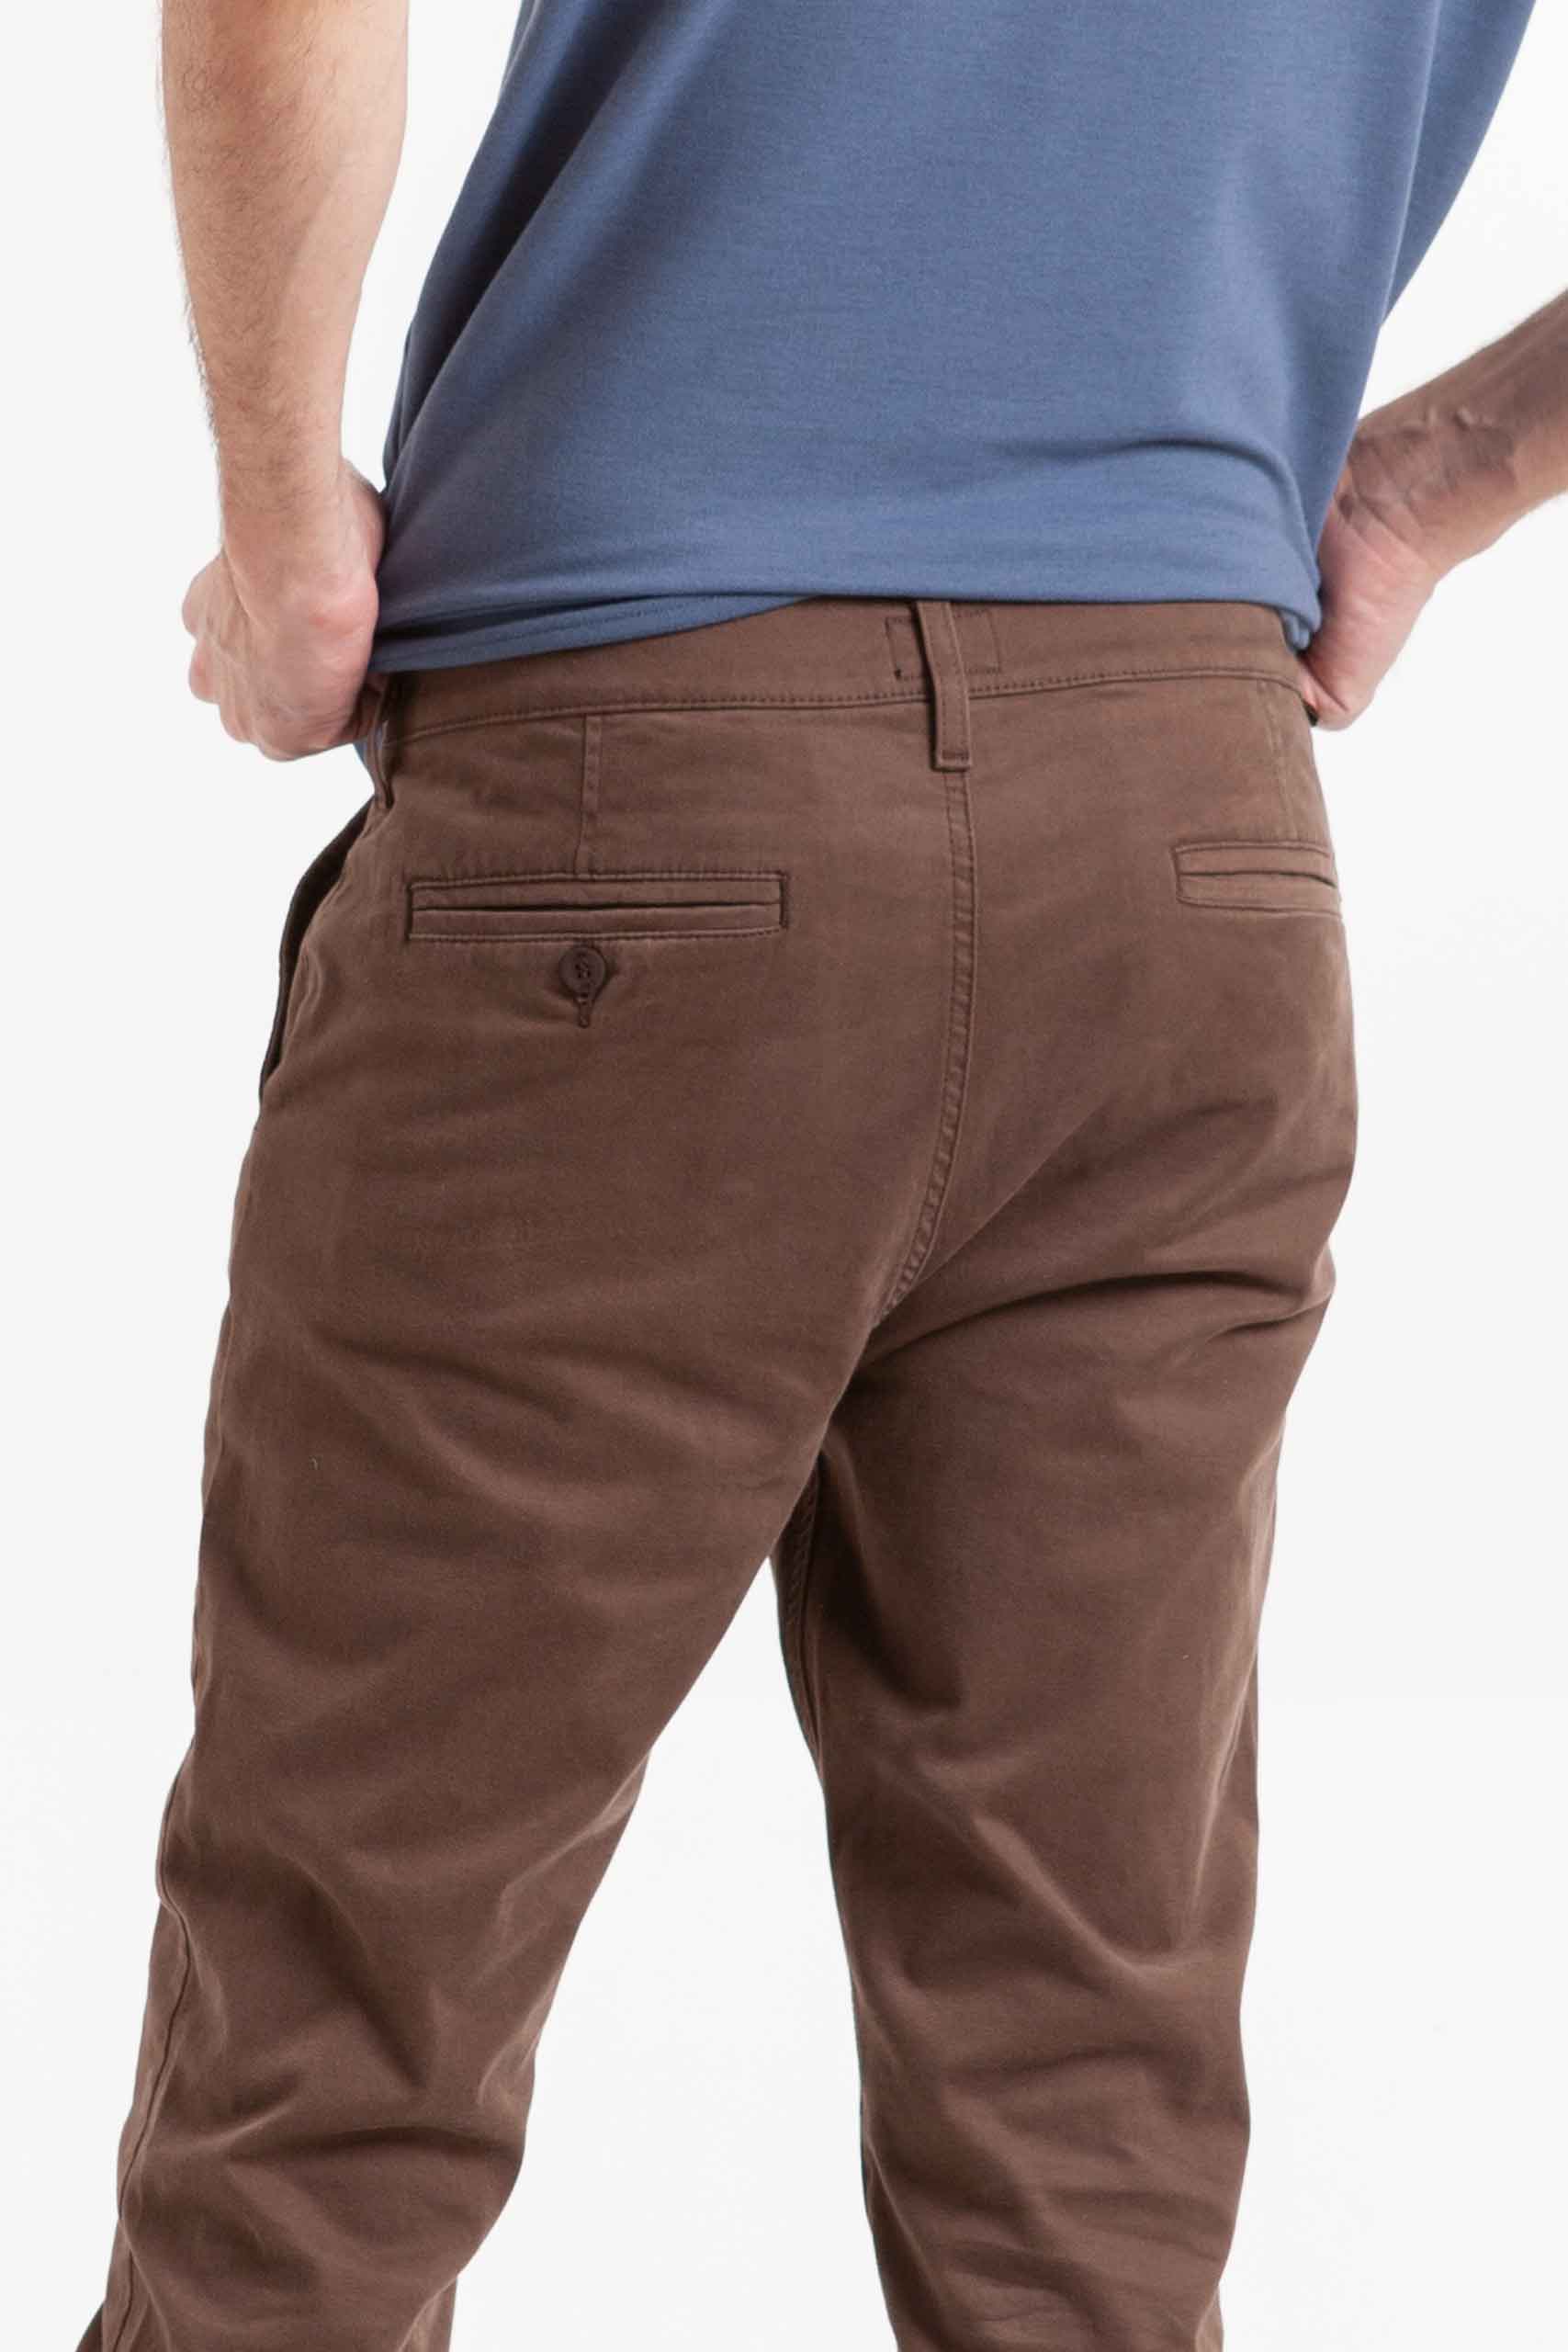 Vista posterior de pantalón café de pierna semi ajustada de marca lee